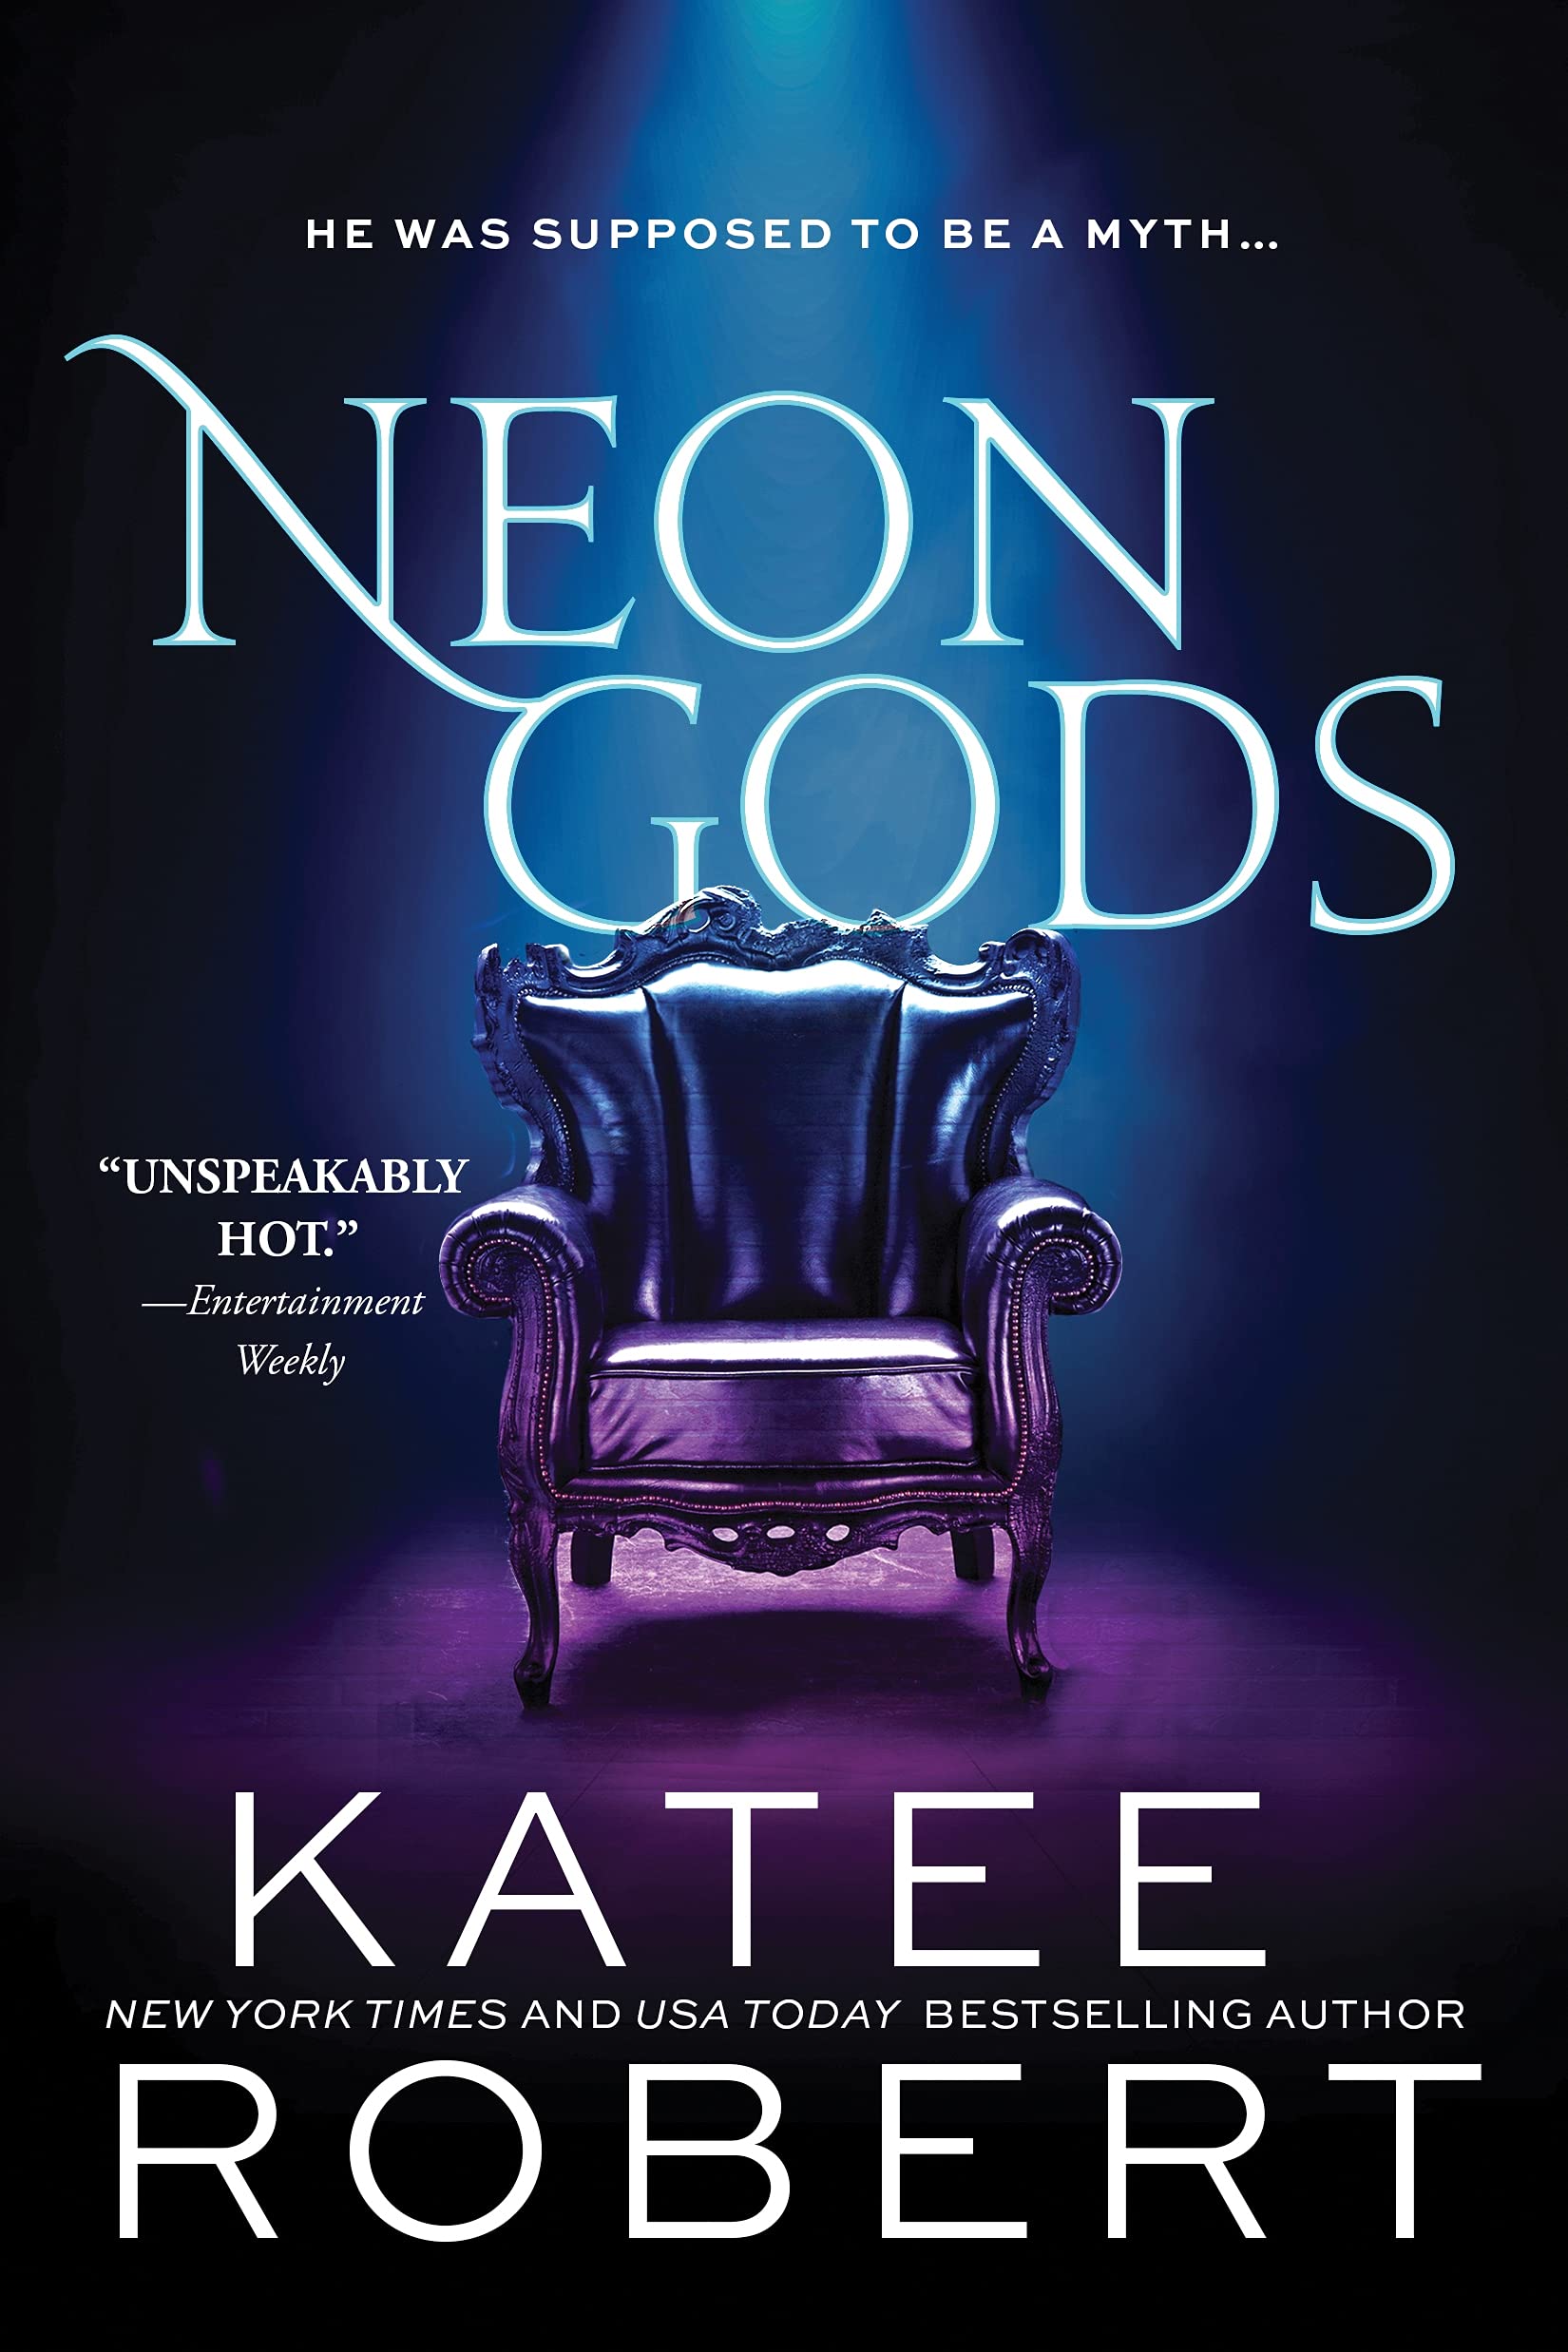 Neon Gods by Robert, Katee